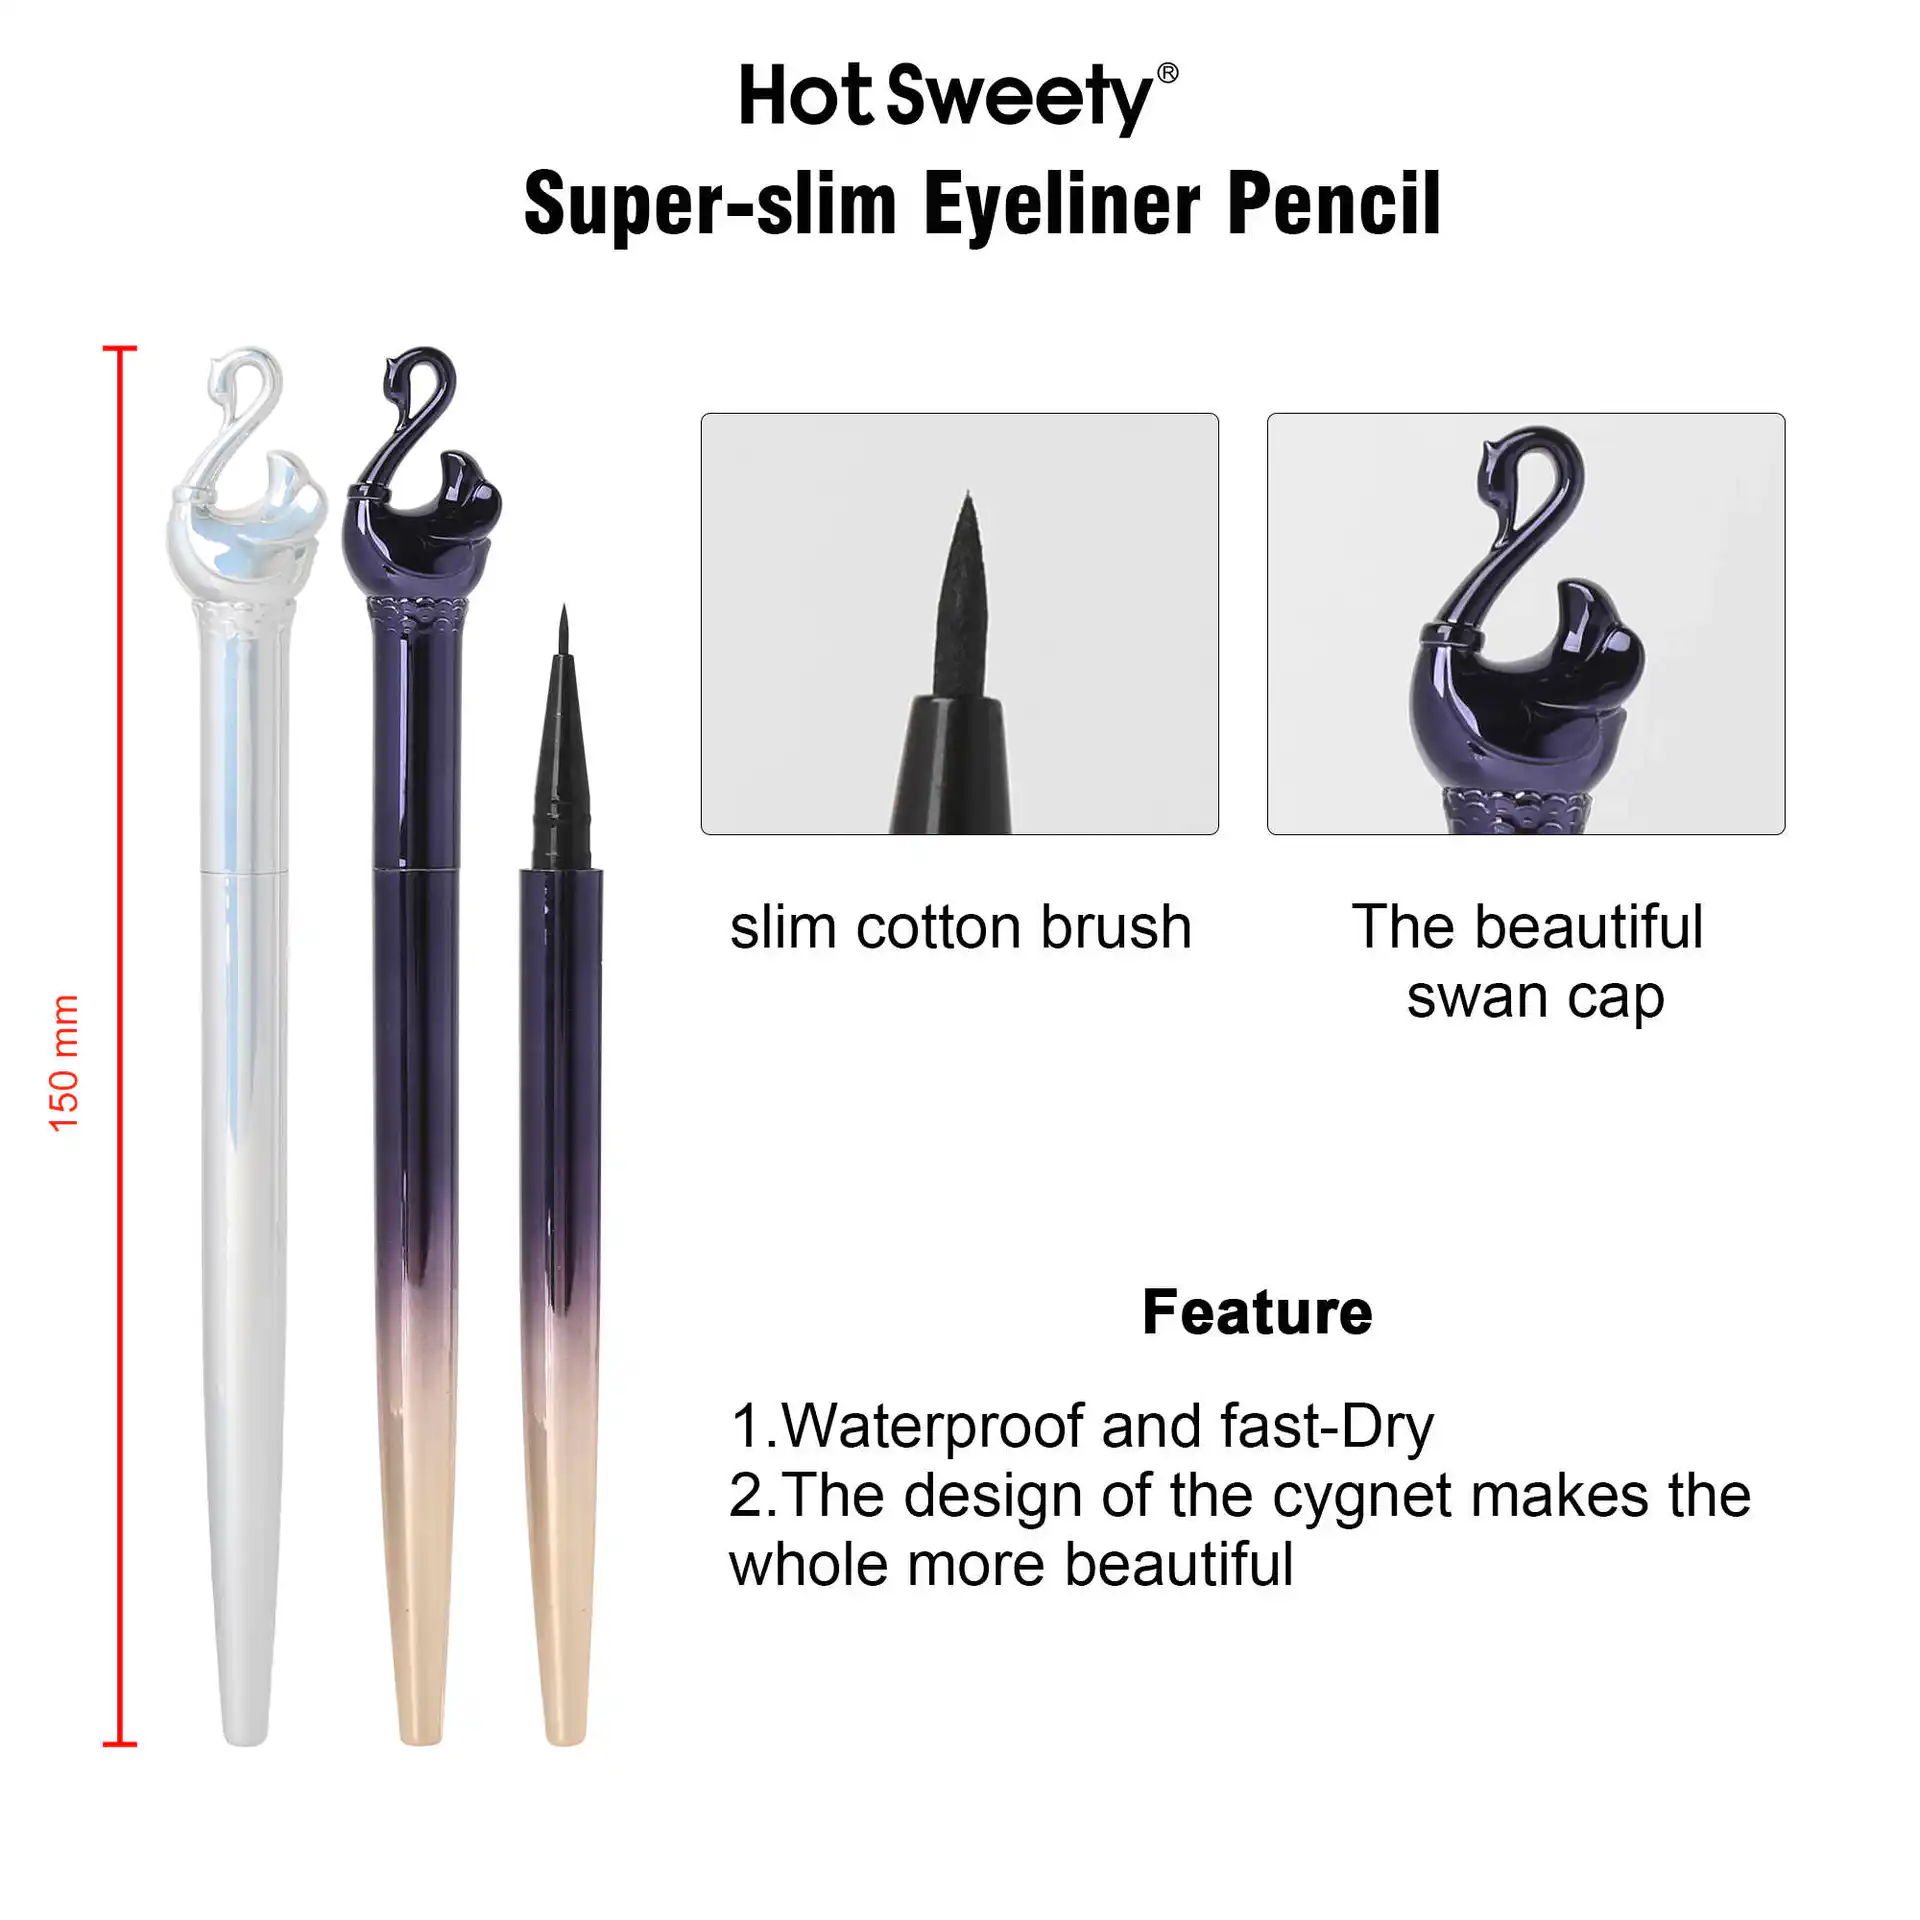 Super-slim Eyeliner Pencil